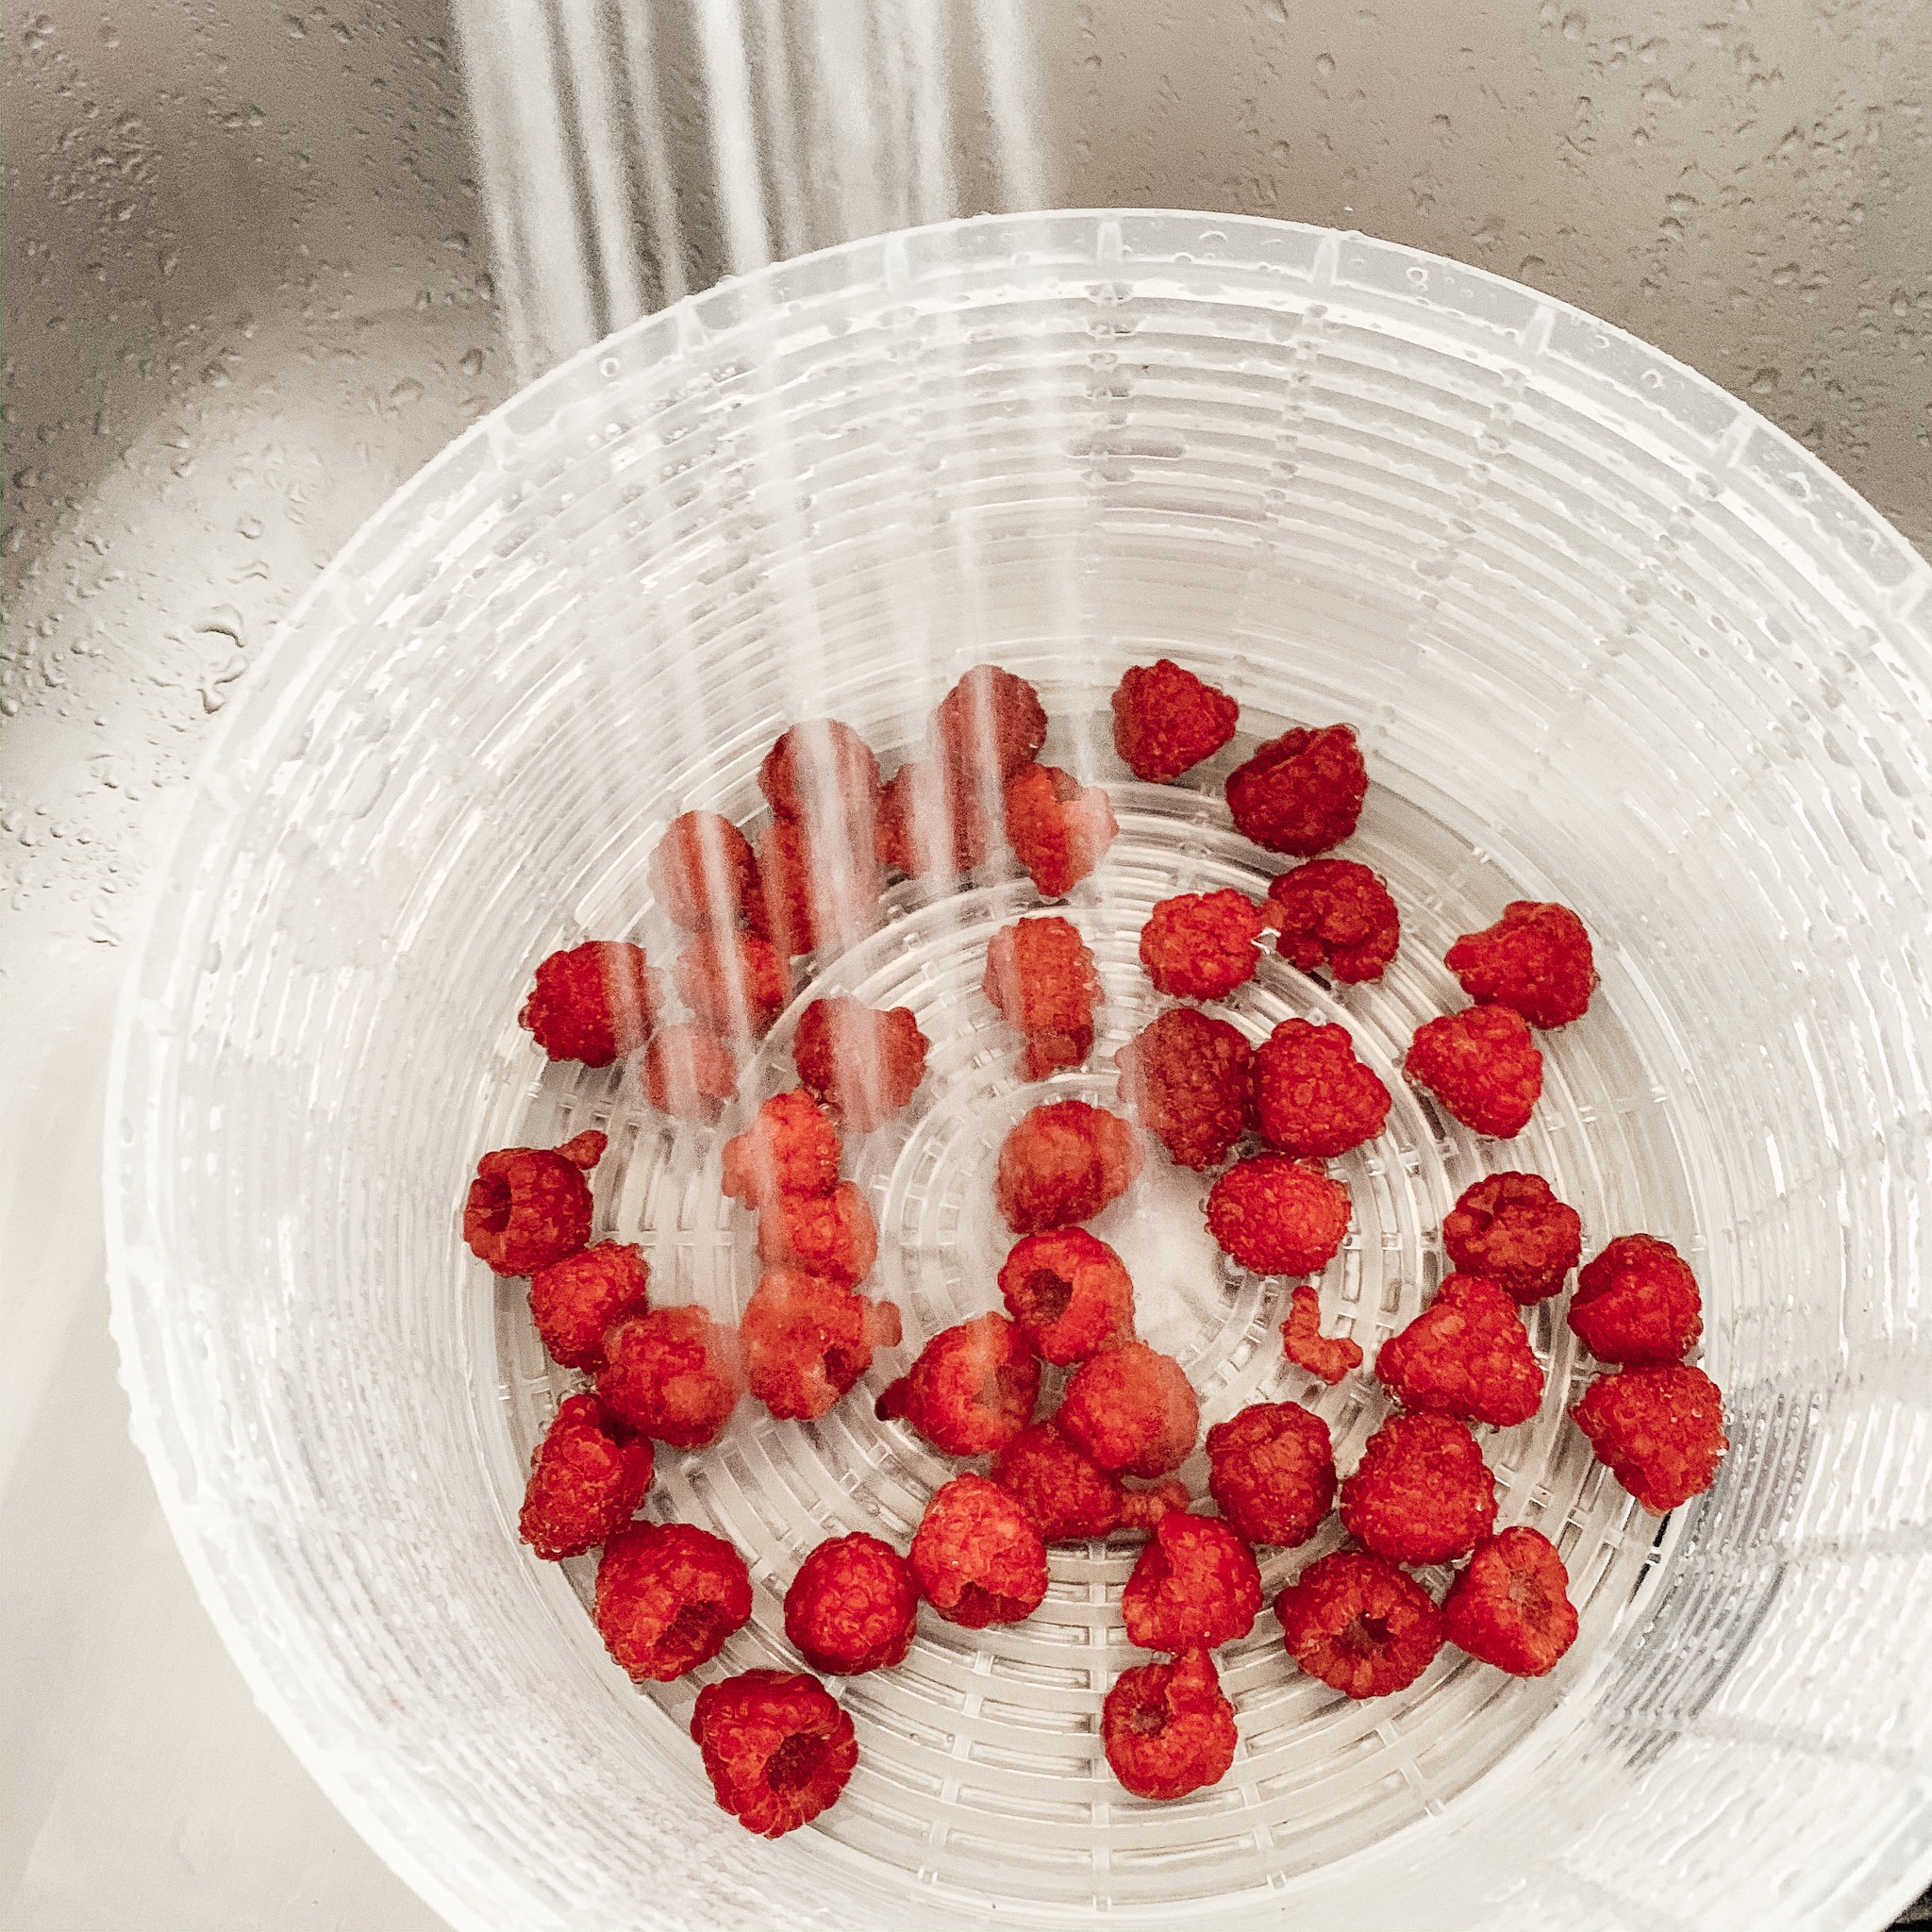 Best Ways to Store Raspberries